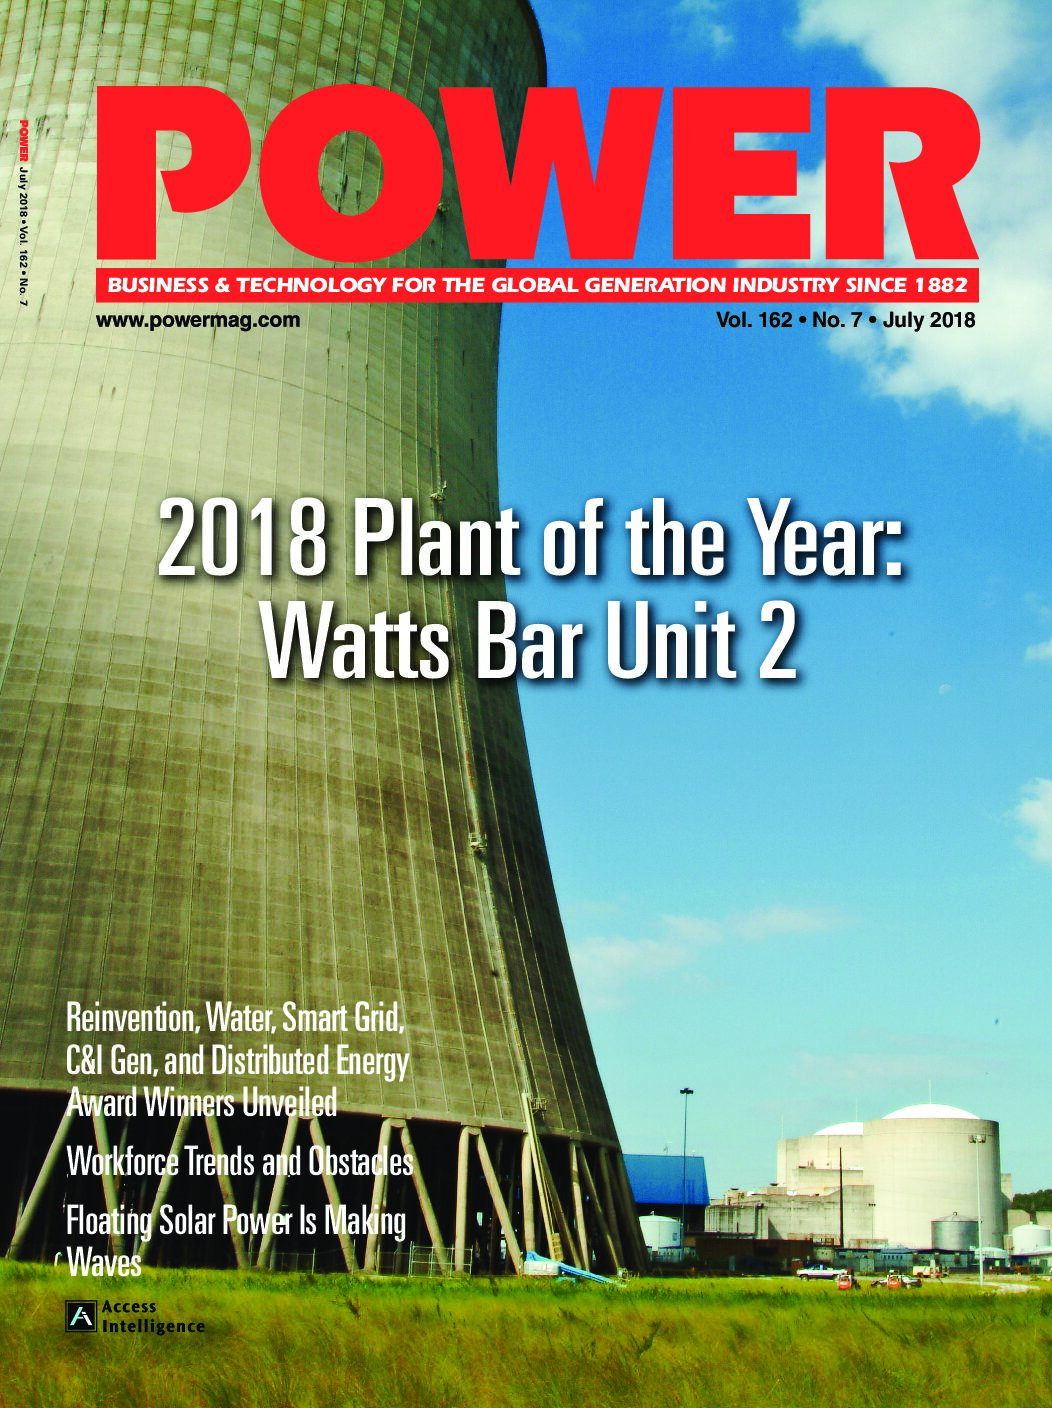 2018 POWER Top Plant Award Winners